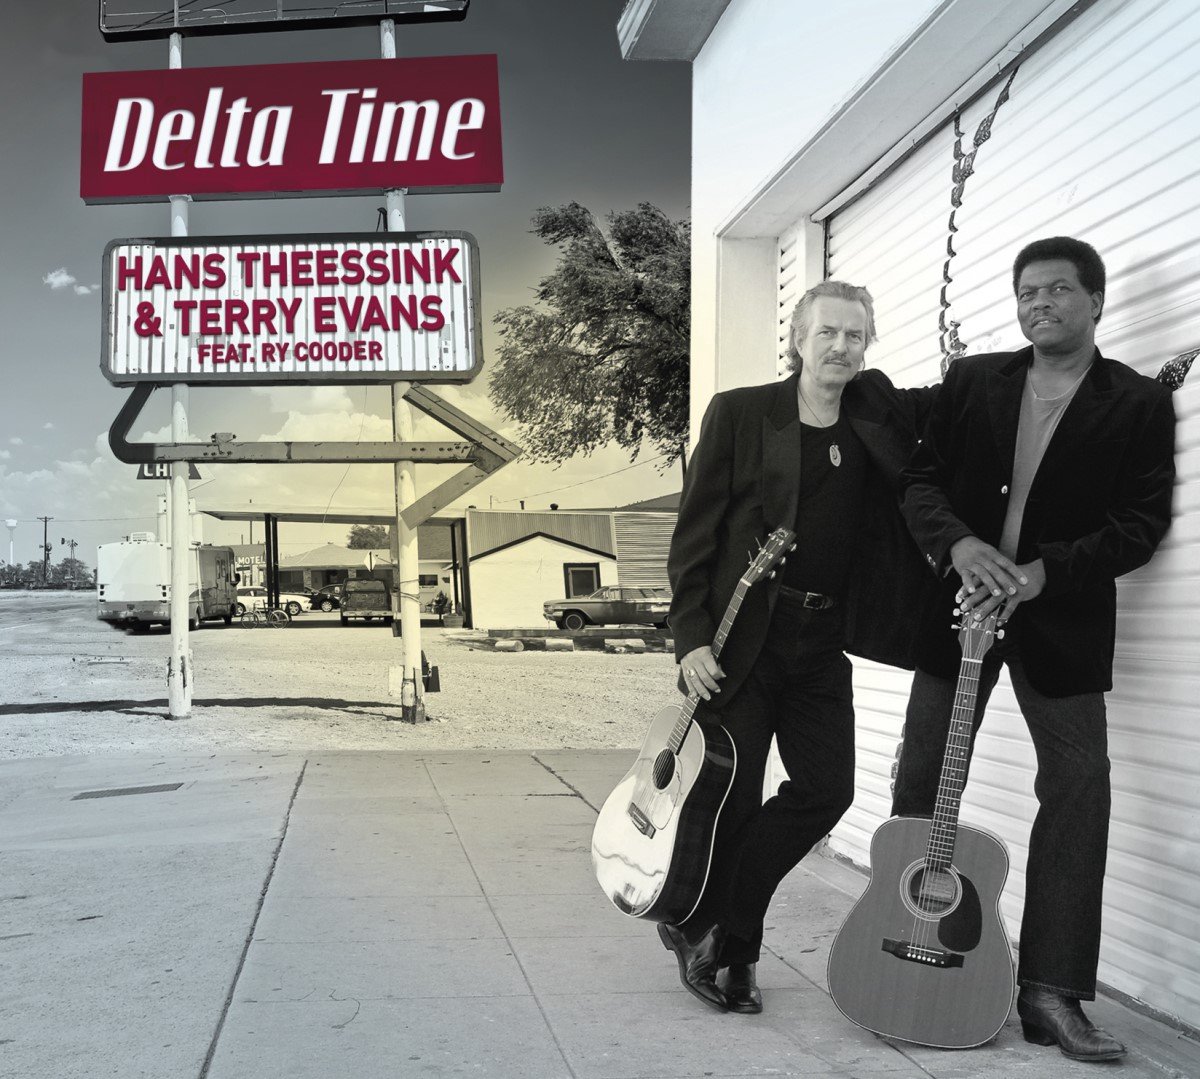 Hans & Terry Evans Theessink - Delta Time (LP) - Hans & Terry Evans Theessink